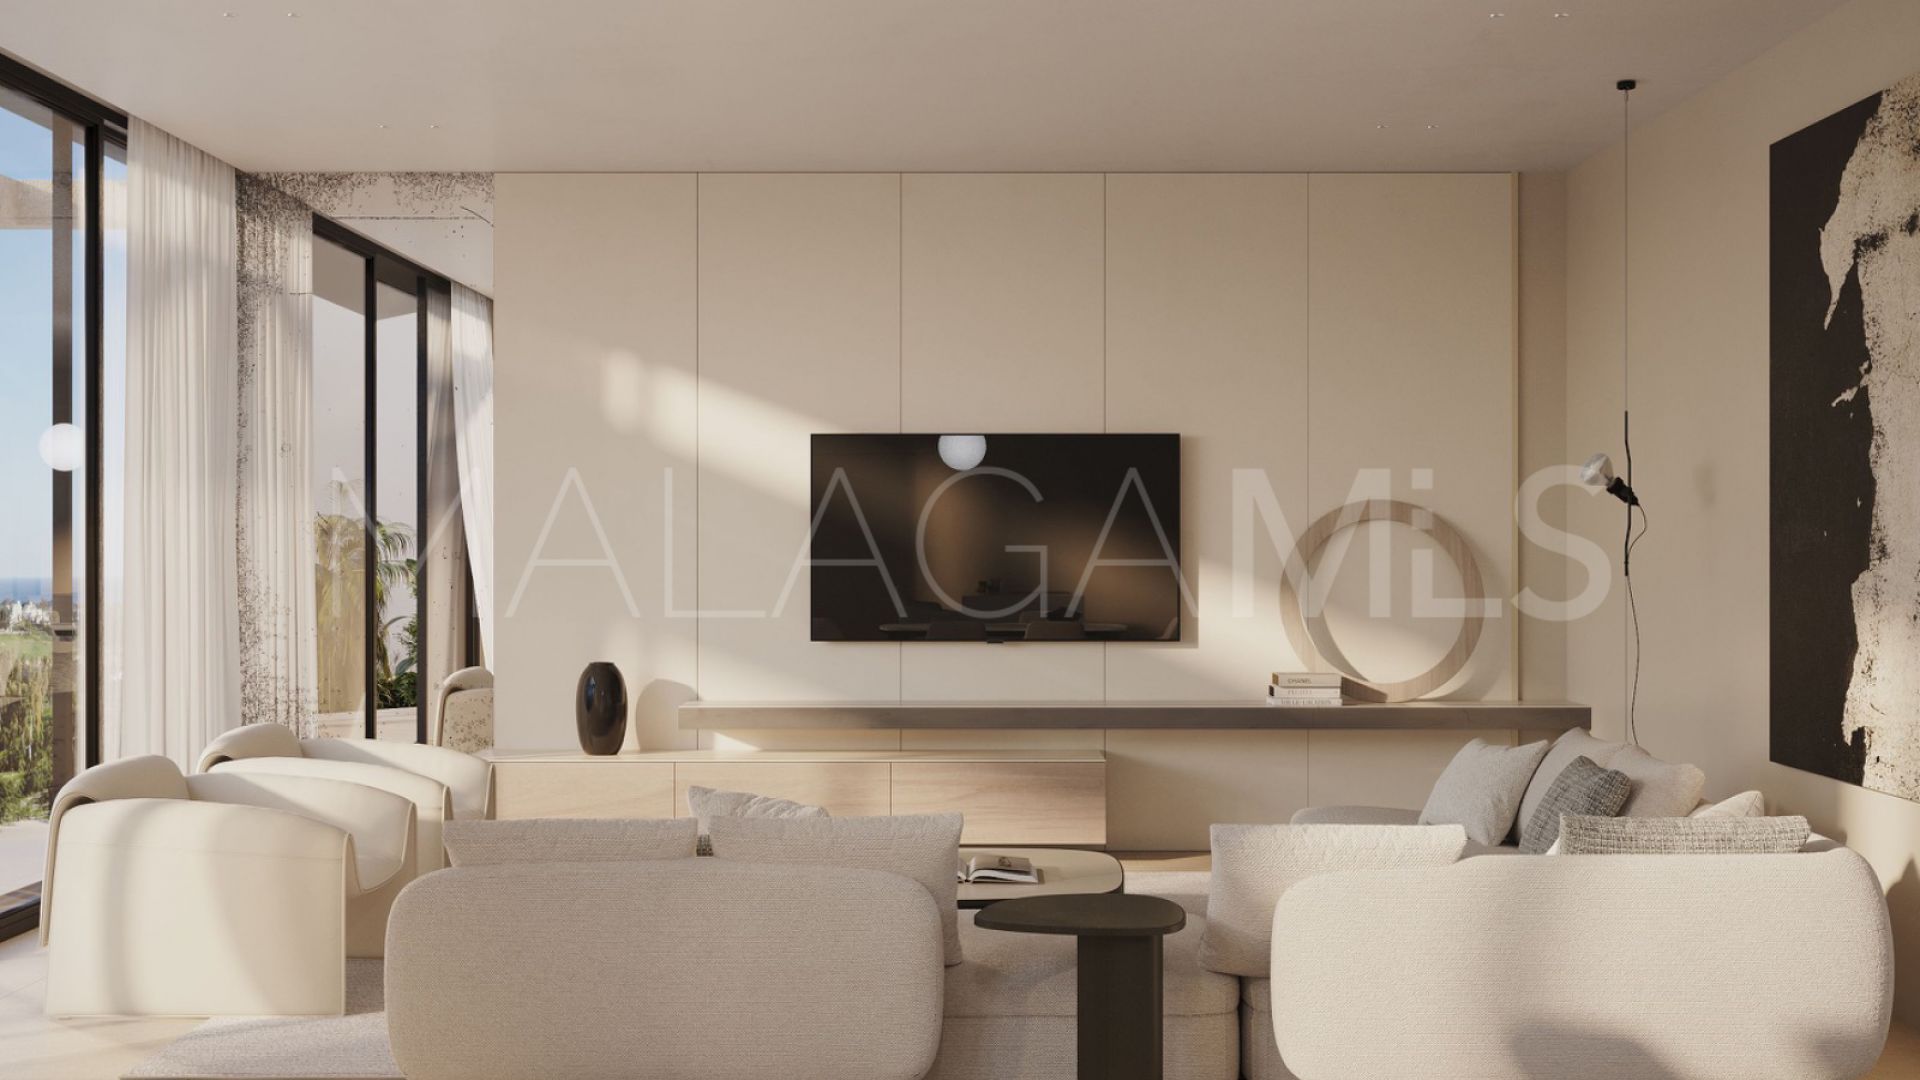 Azata Golf 4 bedrooms villa for sale